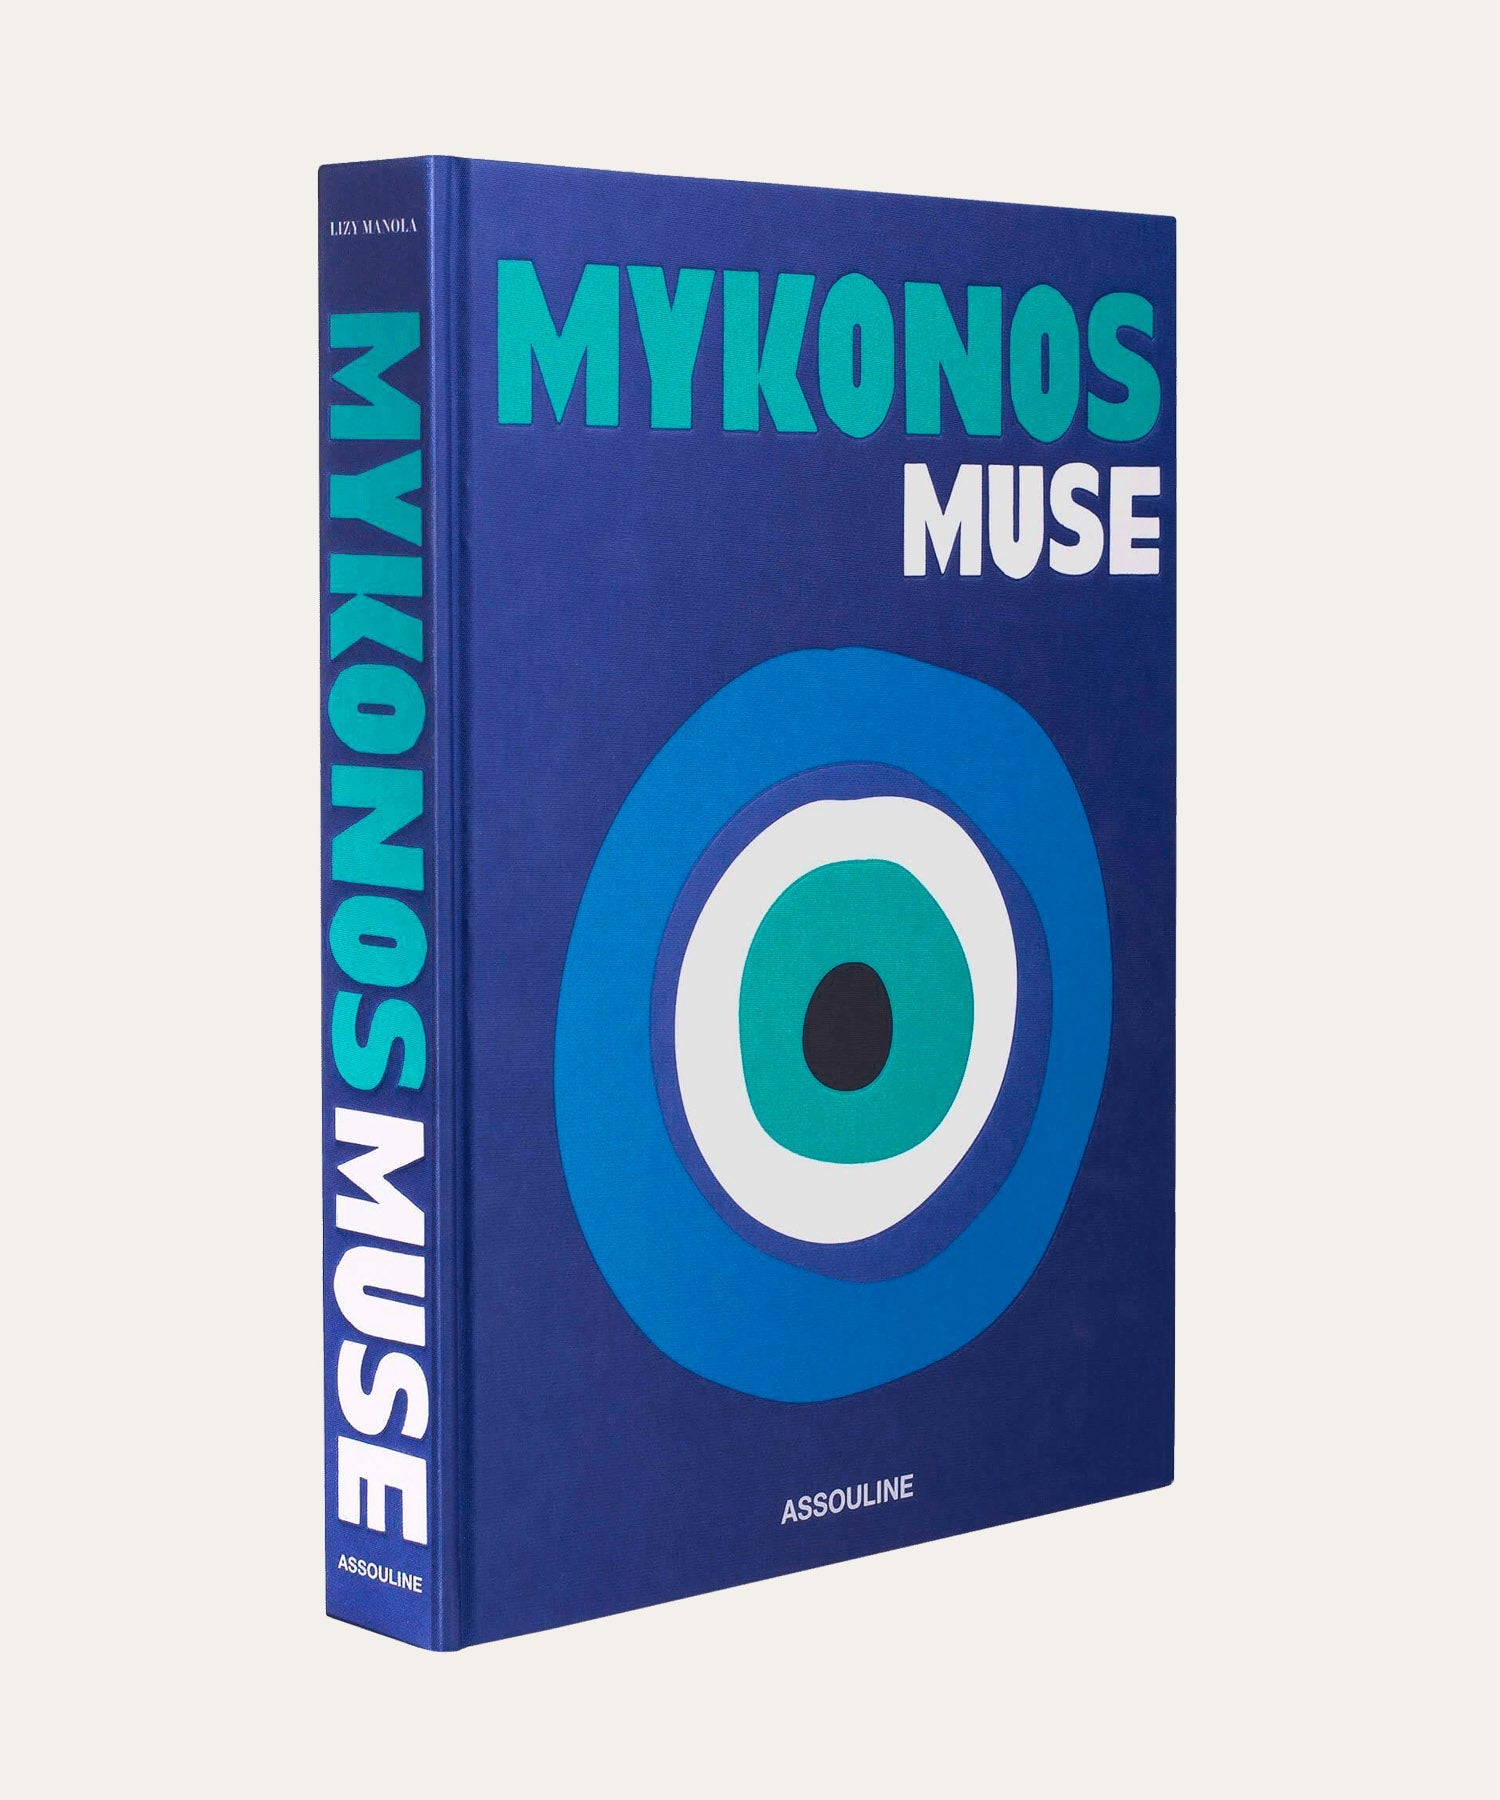 Mykonos Muse - Stephenson House